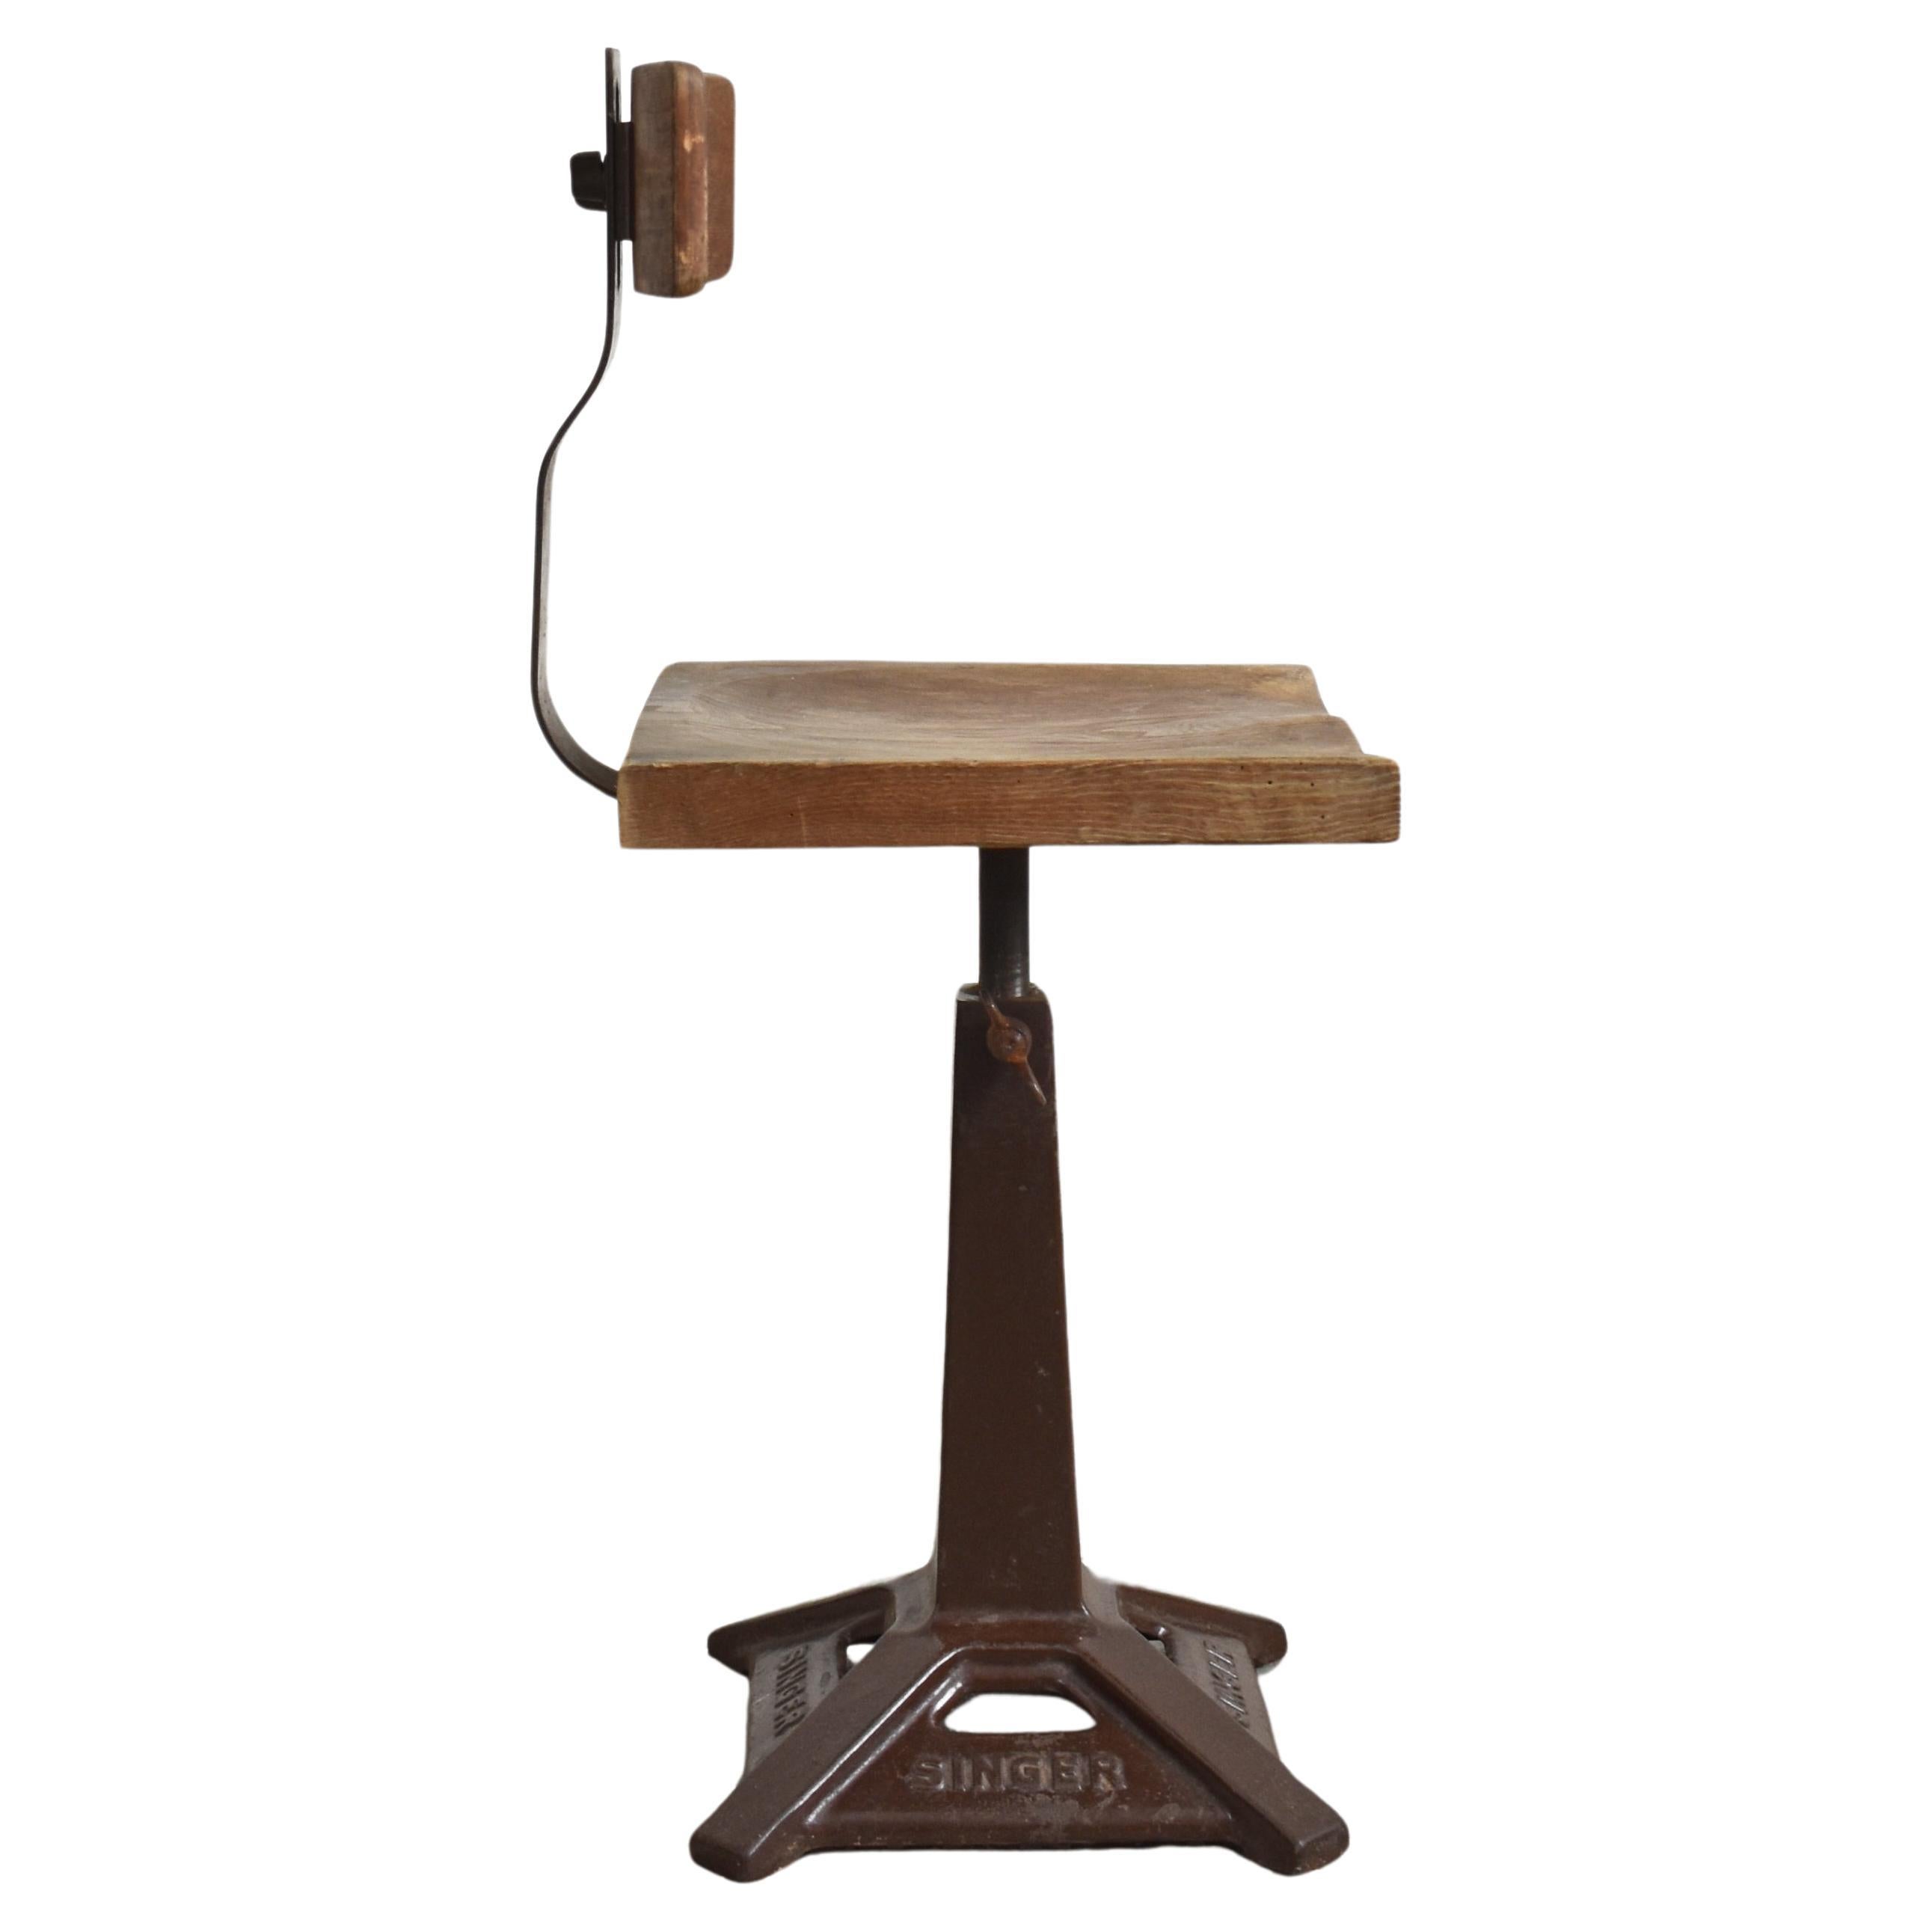 Original Antique English Vintage Singer Desk Swivel Chair